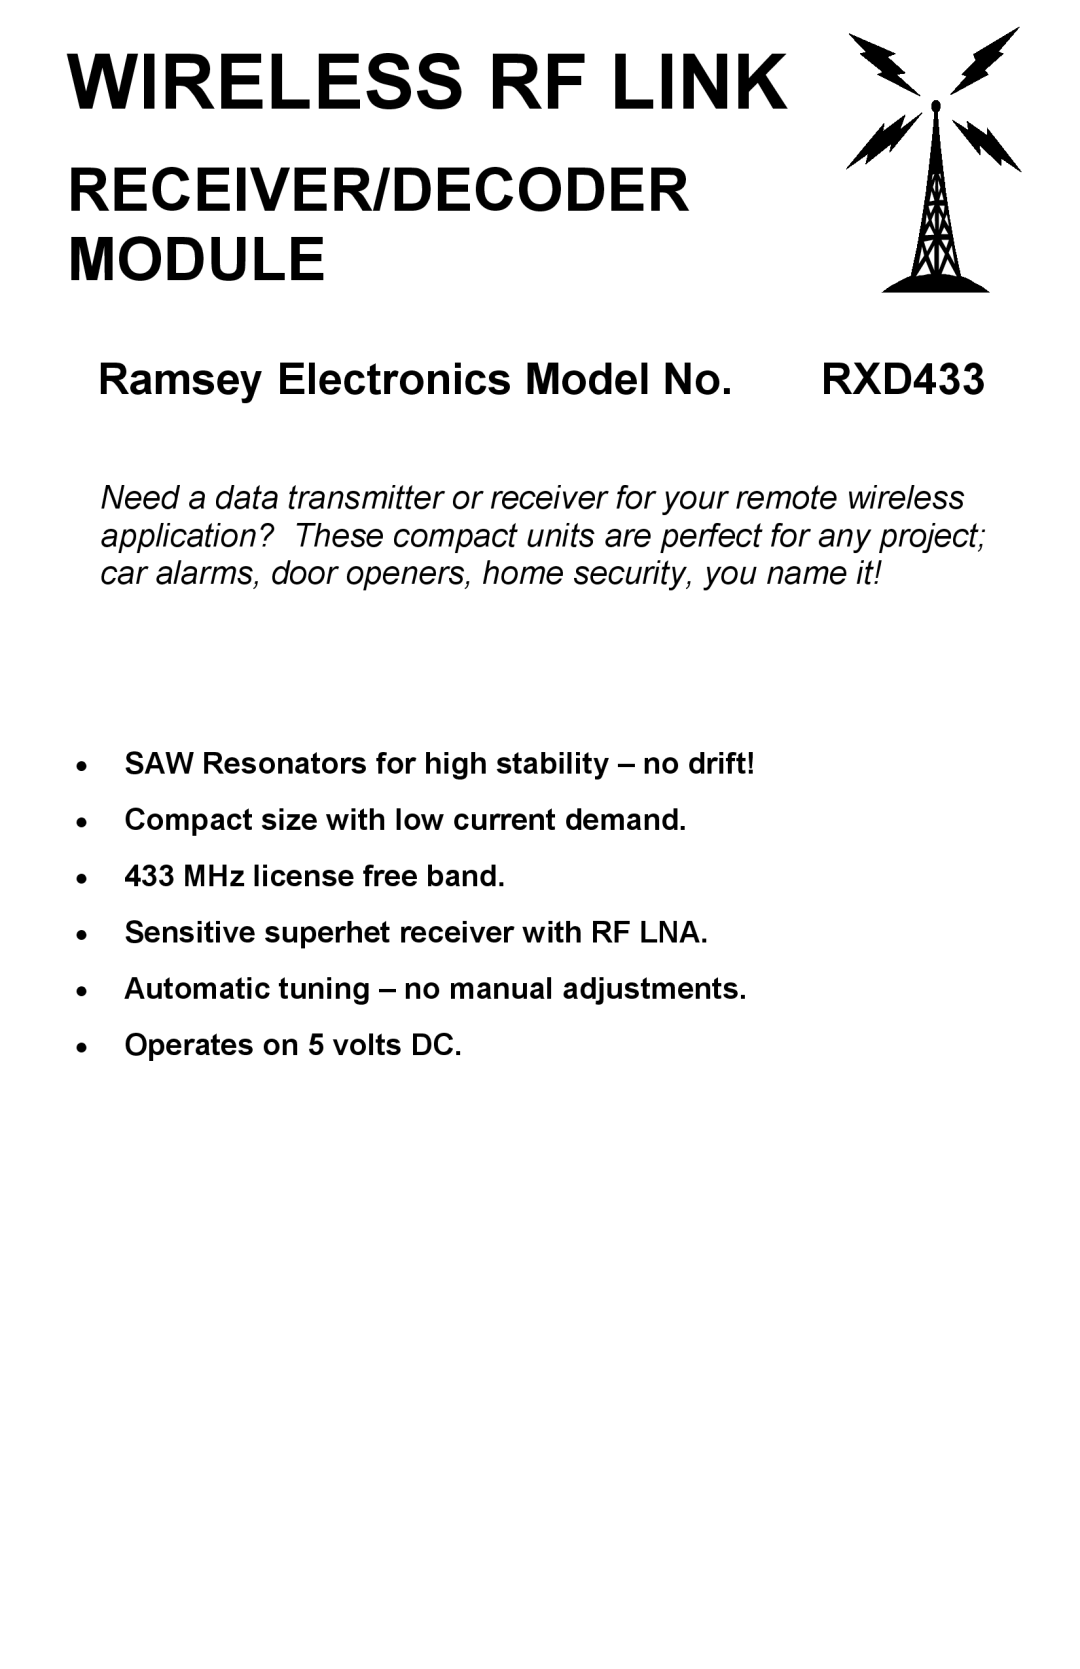 Ramsey Electronics RXD433 manual Wireless Rf Link, Receiver/Decoder Module, Ramsey Electronics Model No 